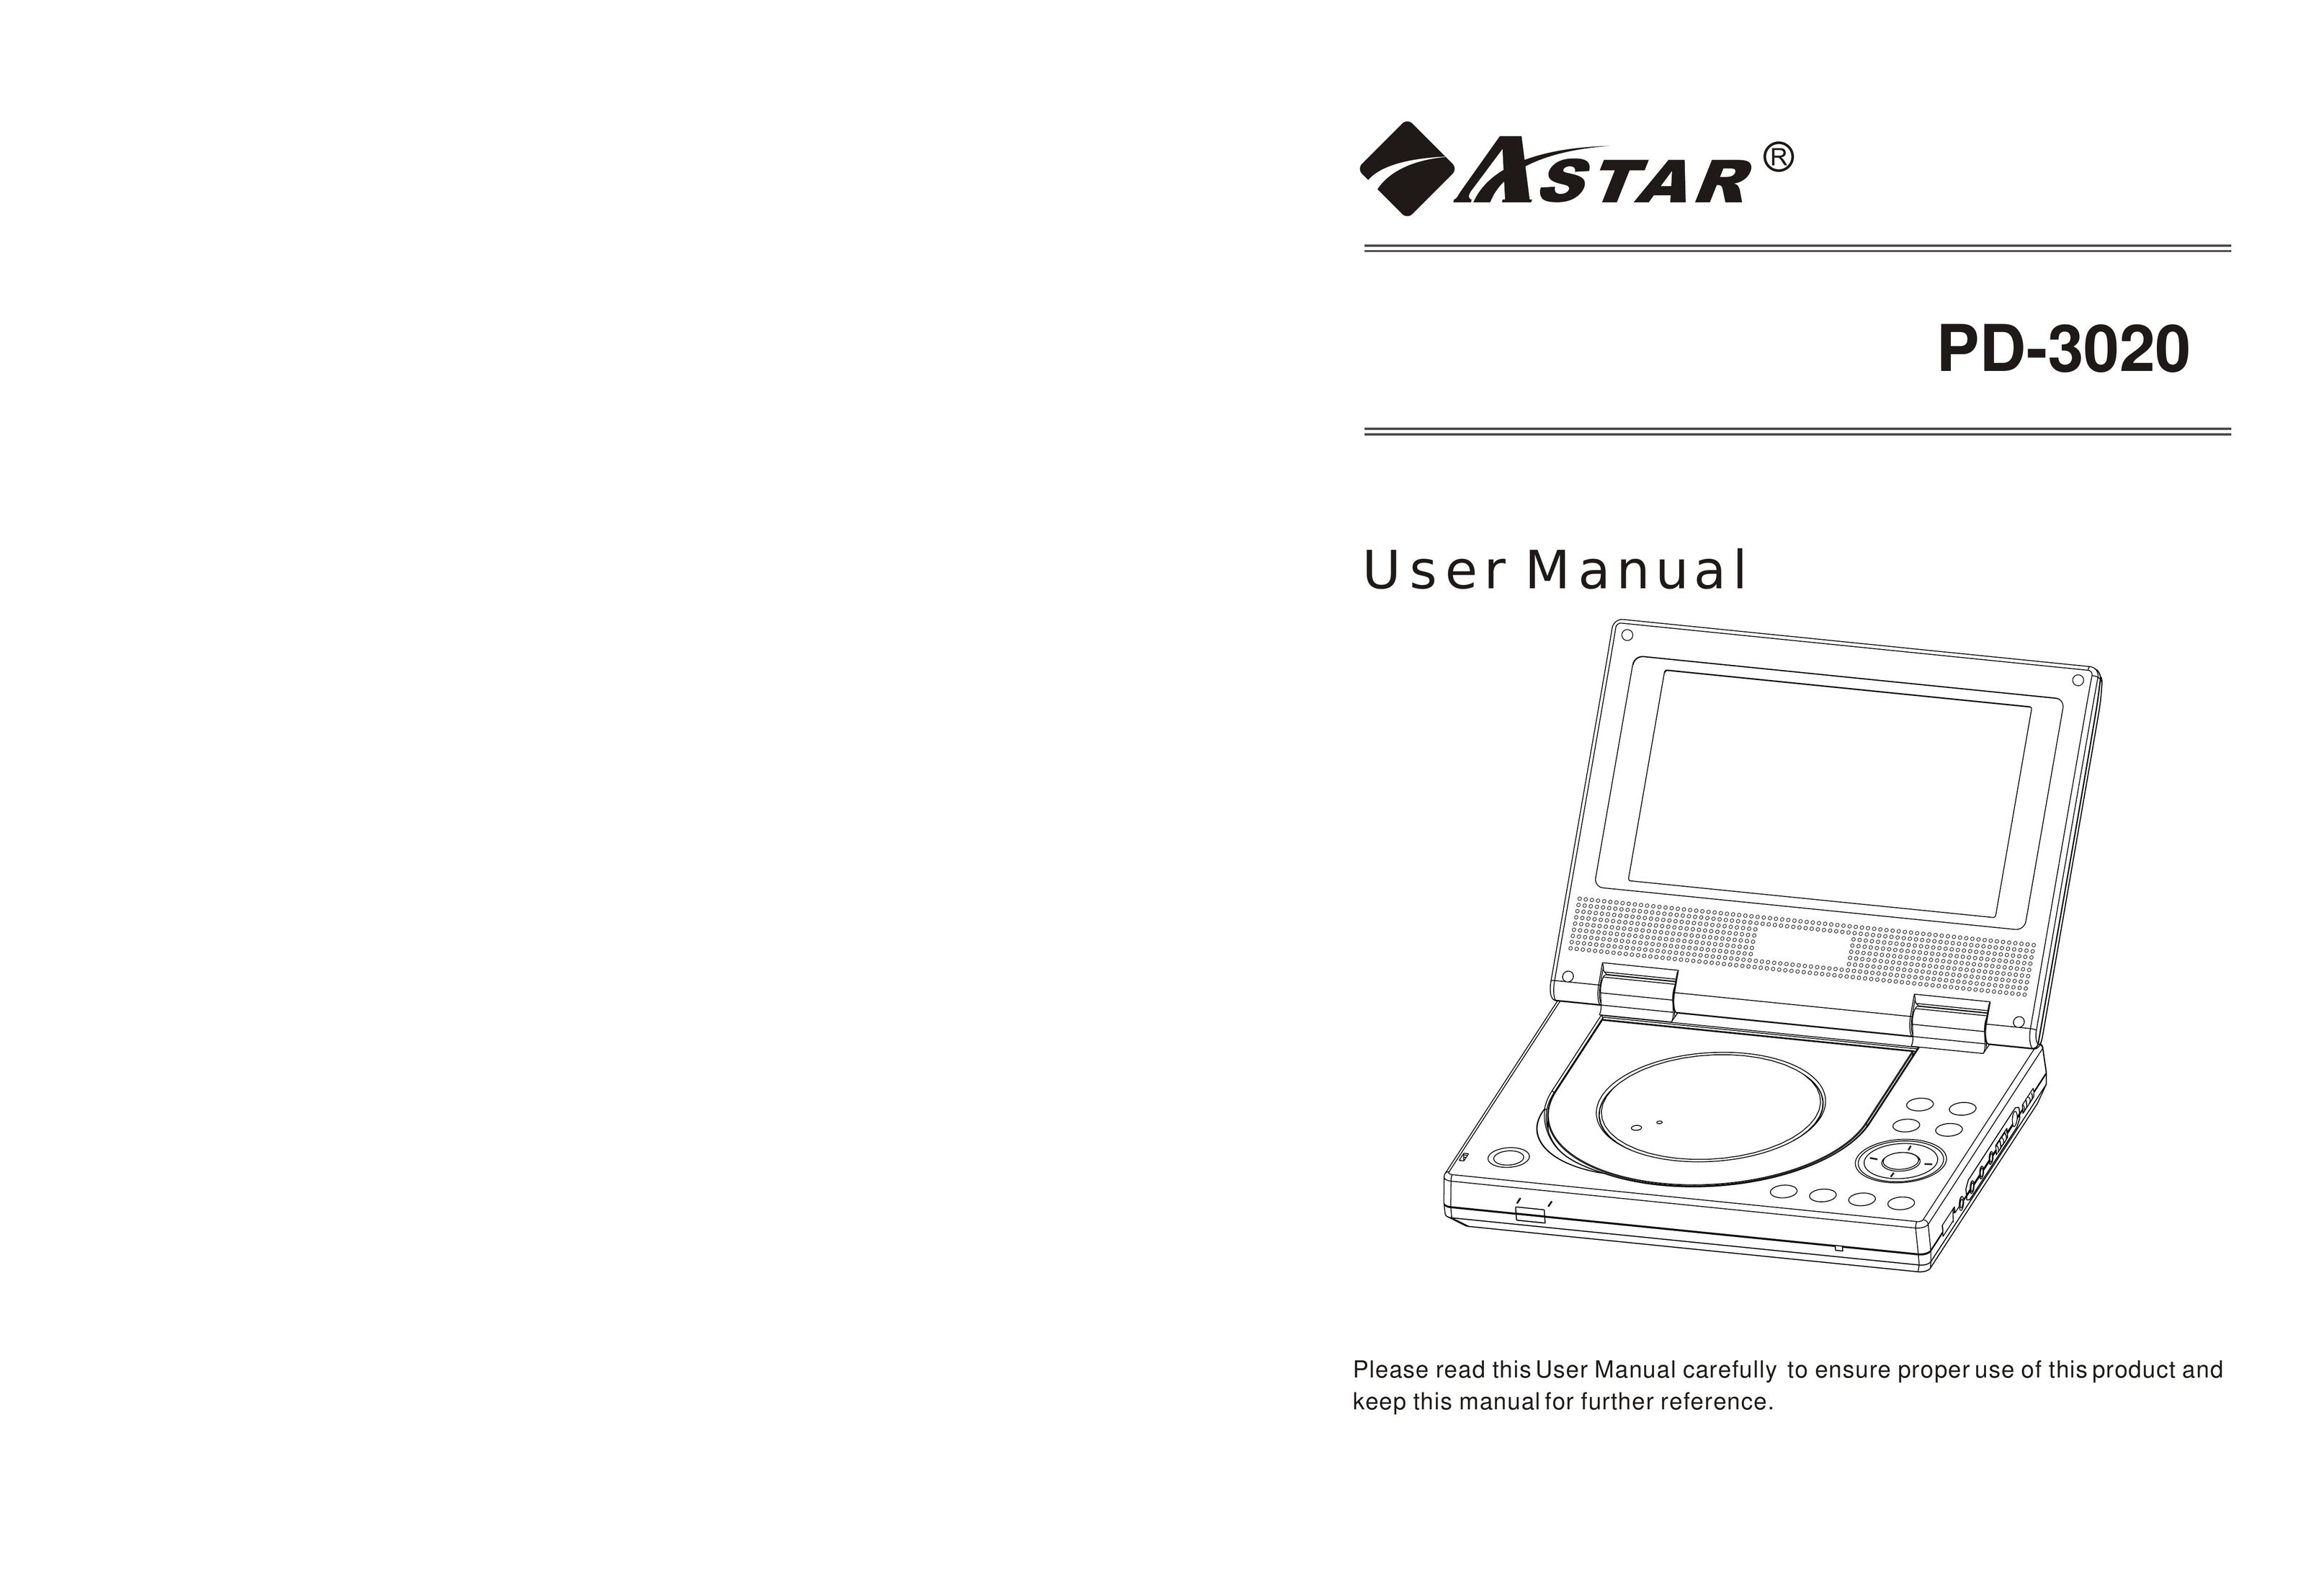 Astar electronic PD-3020 DVD Player User Manual